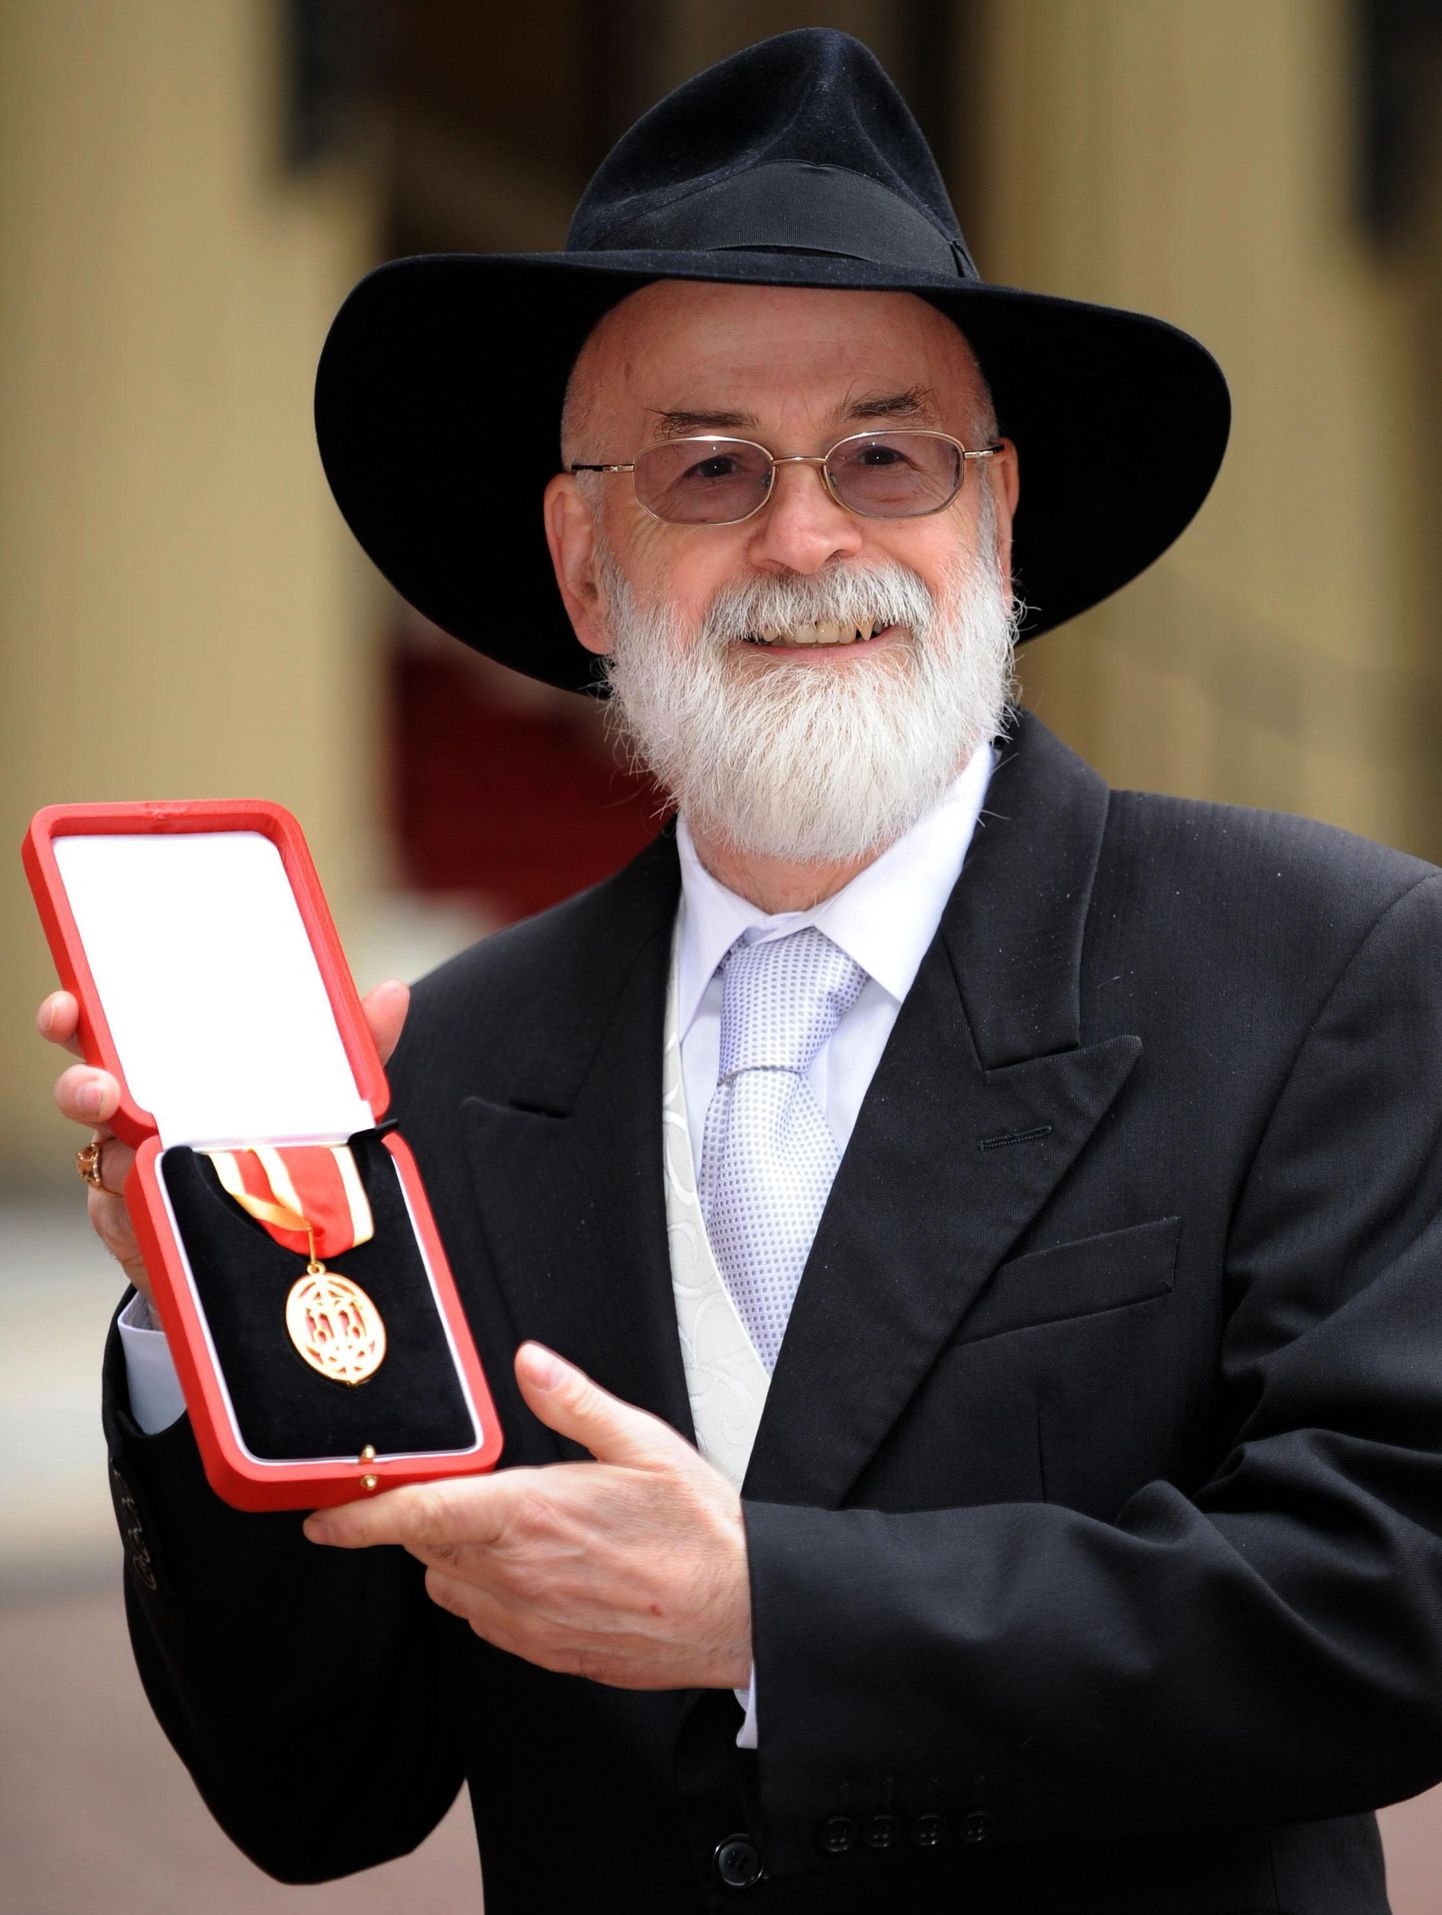 Sir Terry Pratchett hoidmas ta seisust kinnitavat medalit